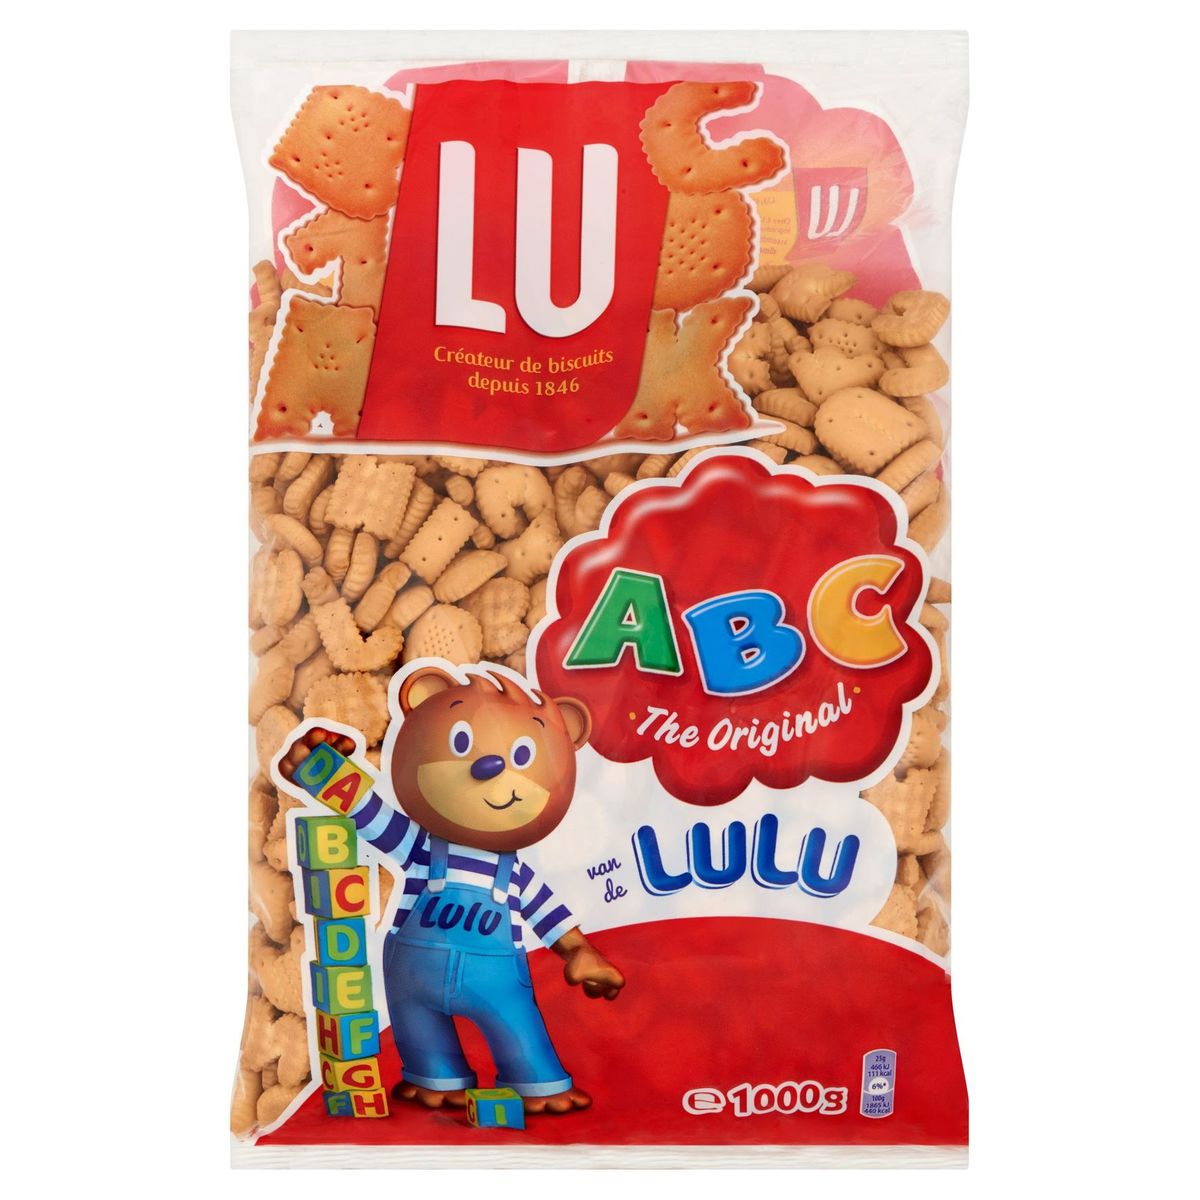 LU ABC Lulu 1000 g